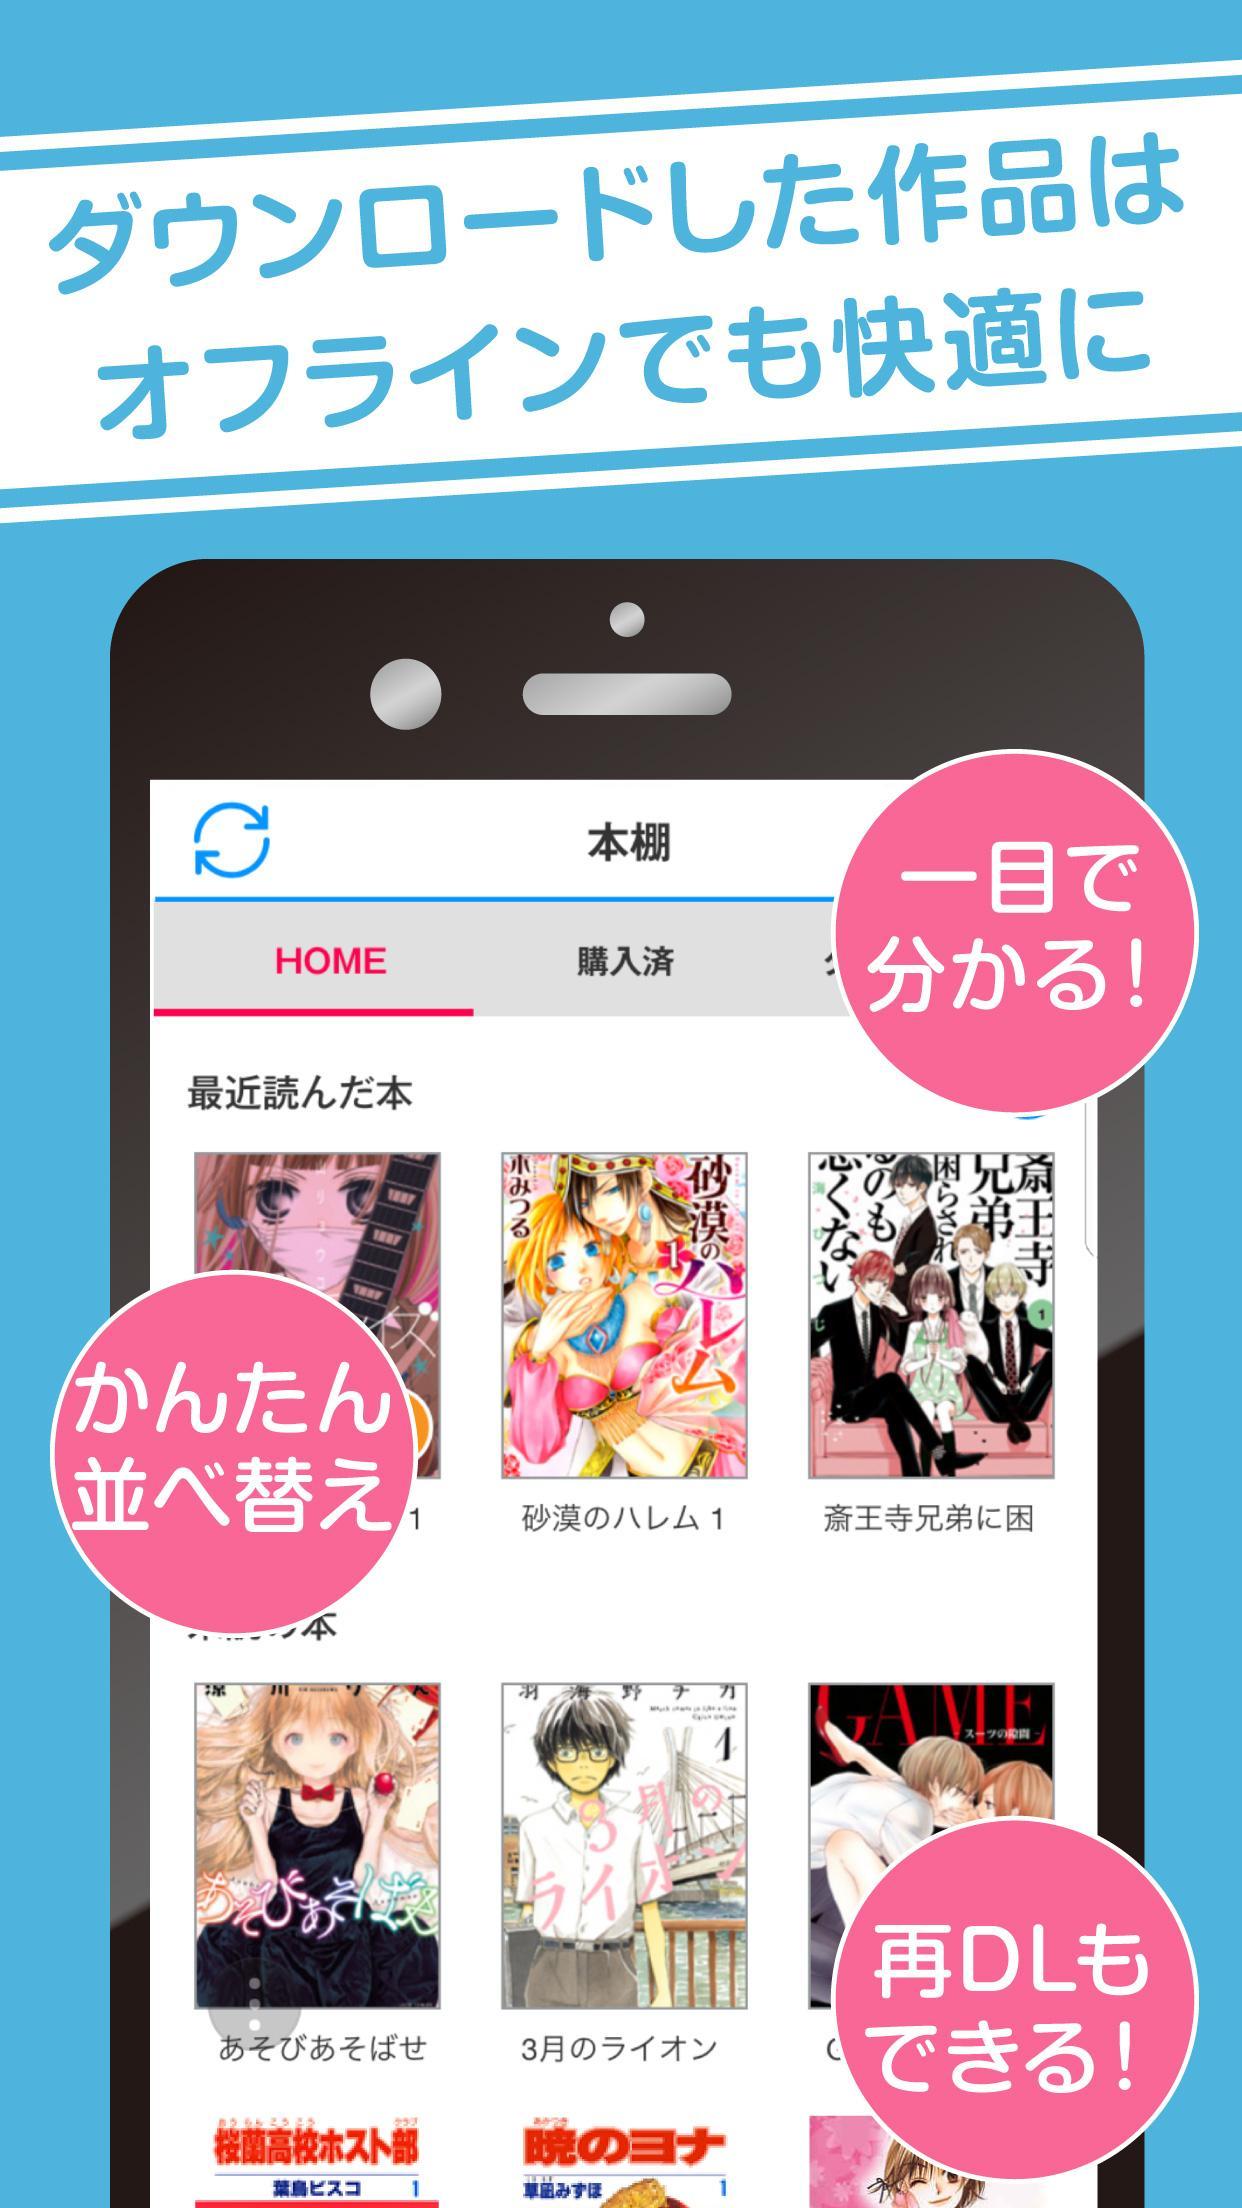 白泉社e-net! 2.2.11 Screenshot 3